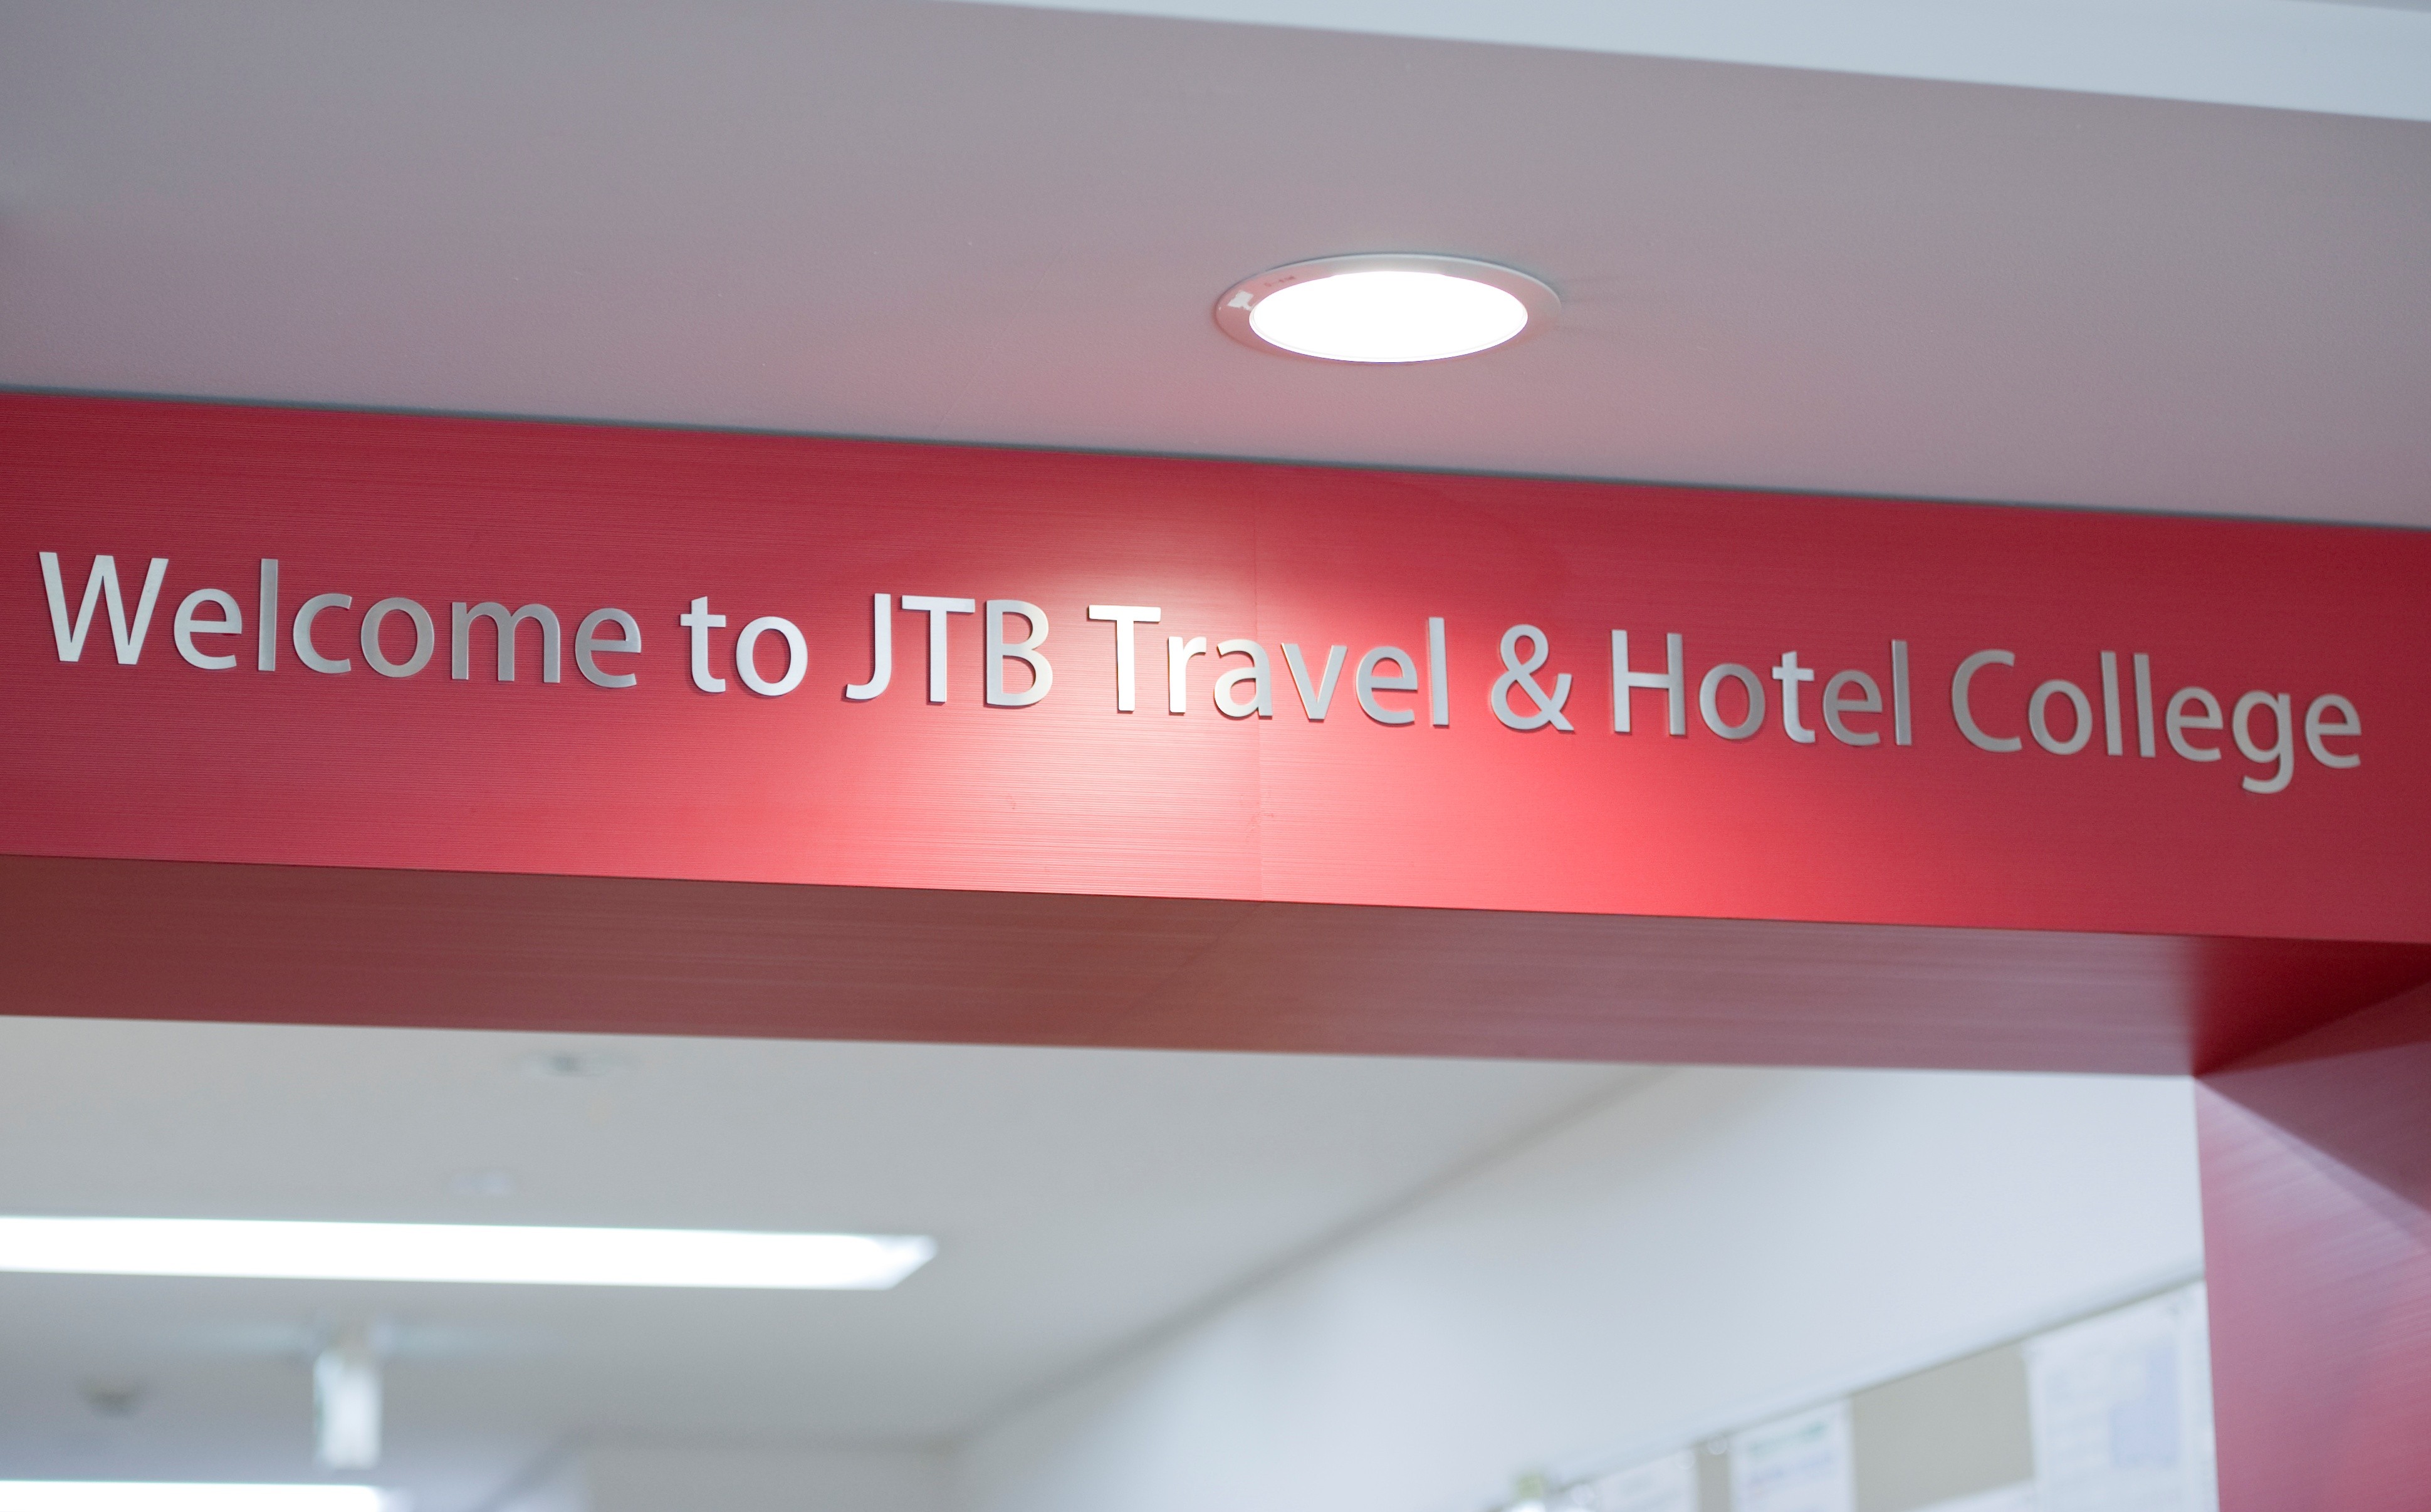 jtb travel & hotel college